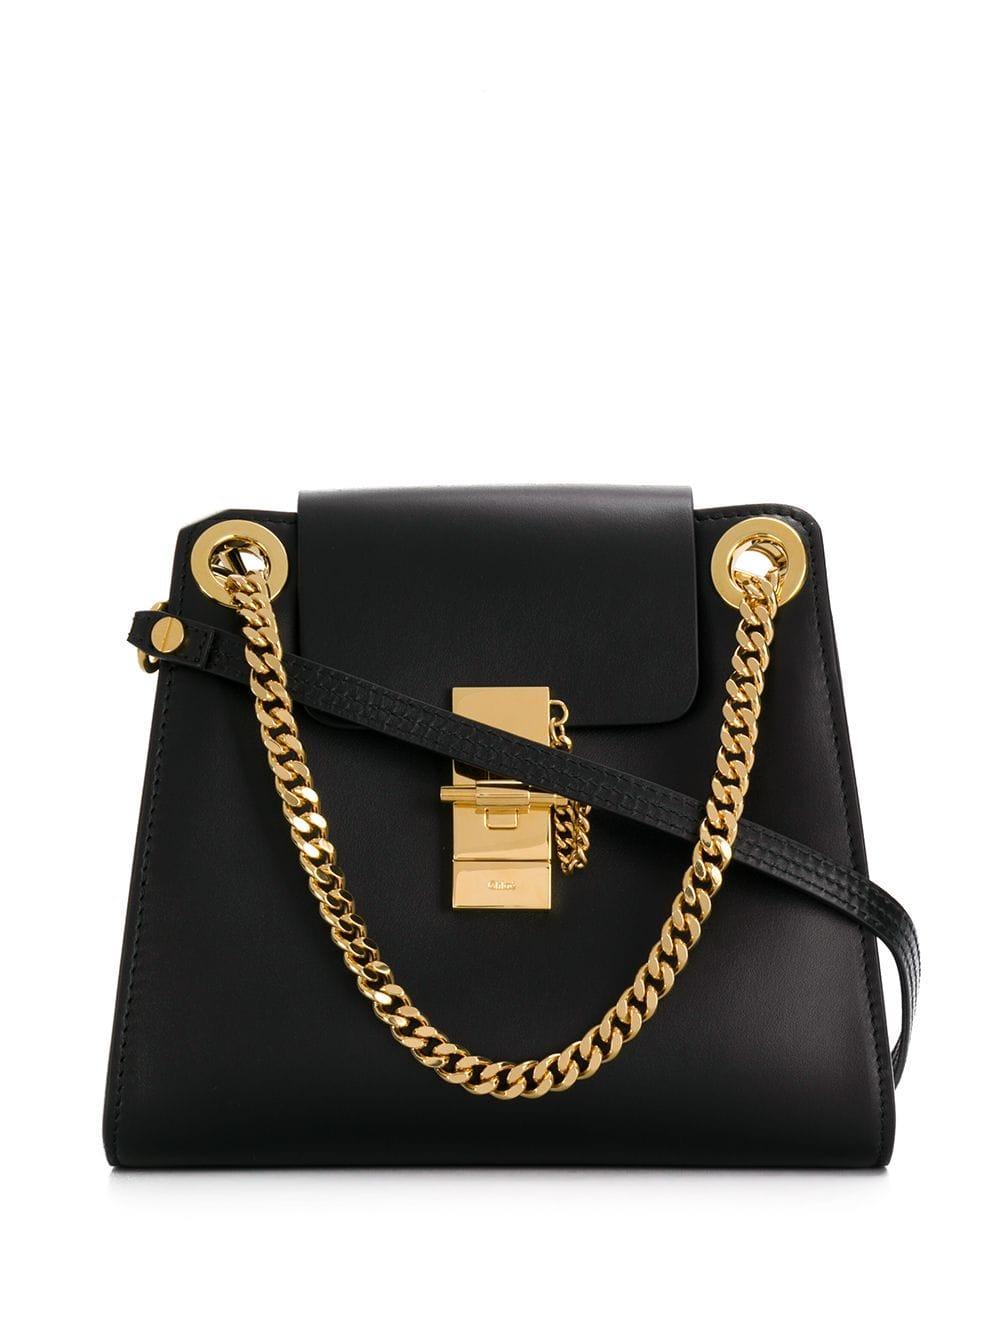 Chloé Mini Annie Shoulder Bag in Black - Lyst